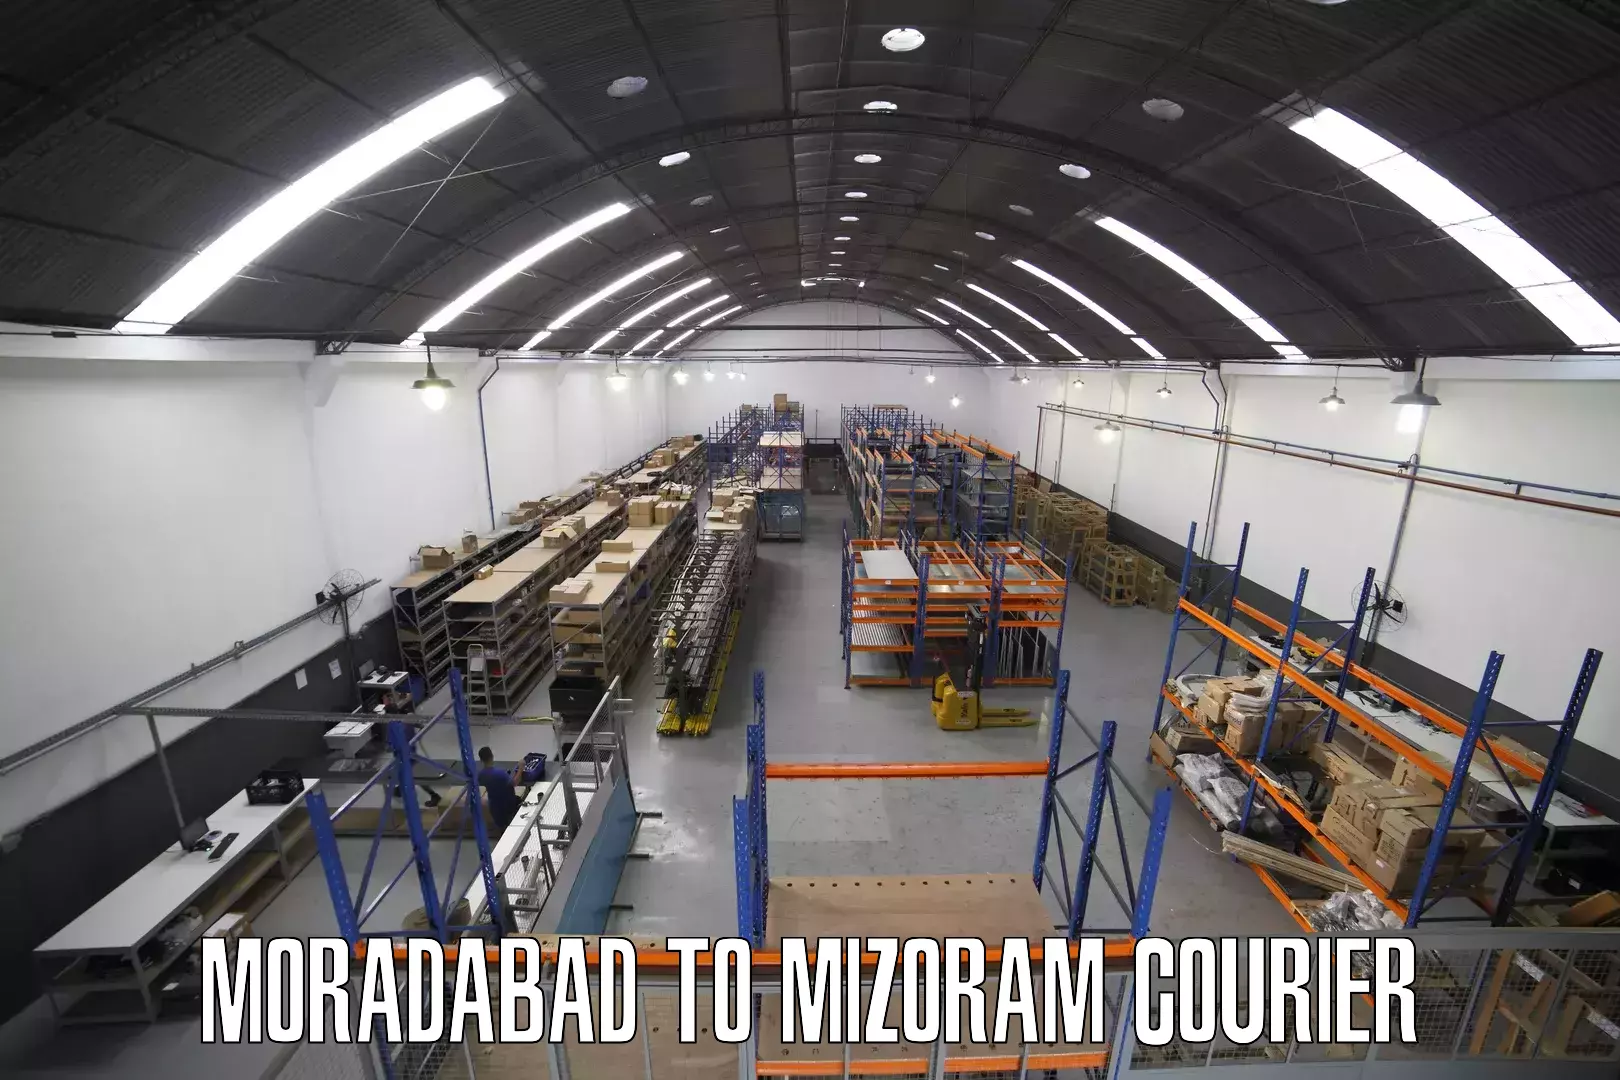 Courier service comparison Moradabad to Mizoram